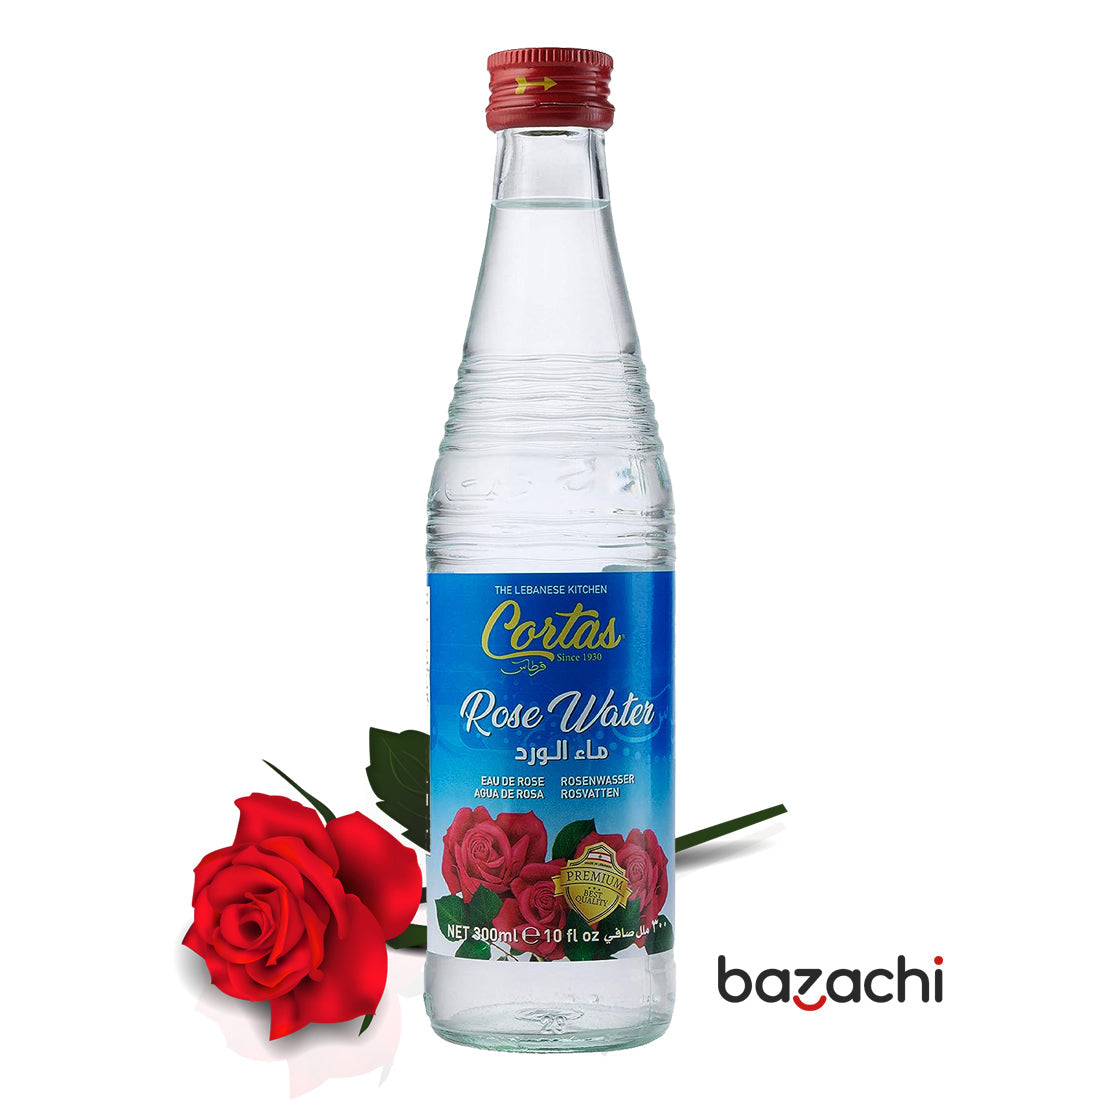 Cortas - Blossom Rose Water - Gluten Free 500ml